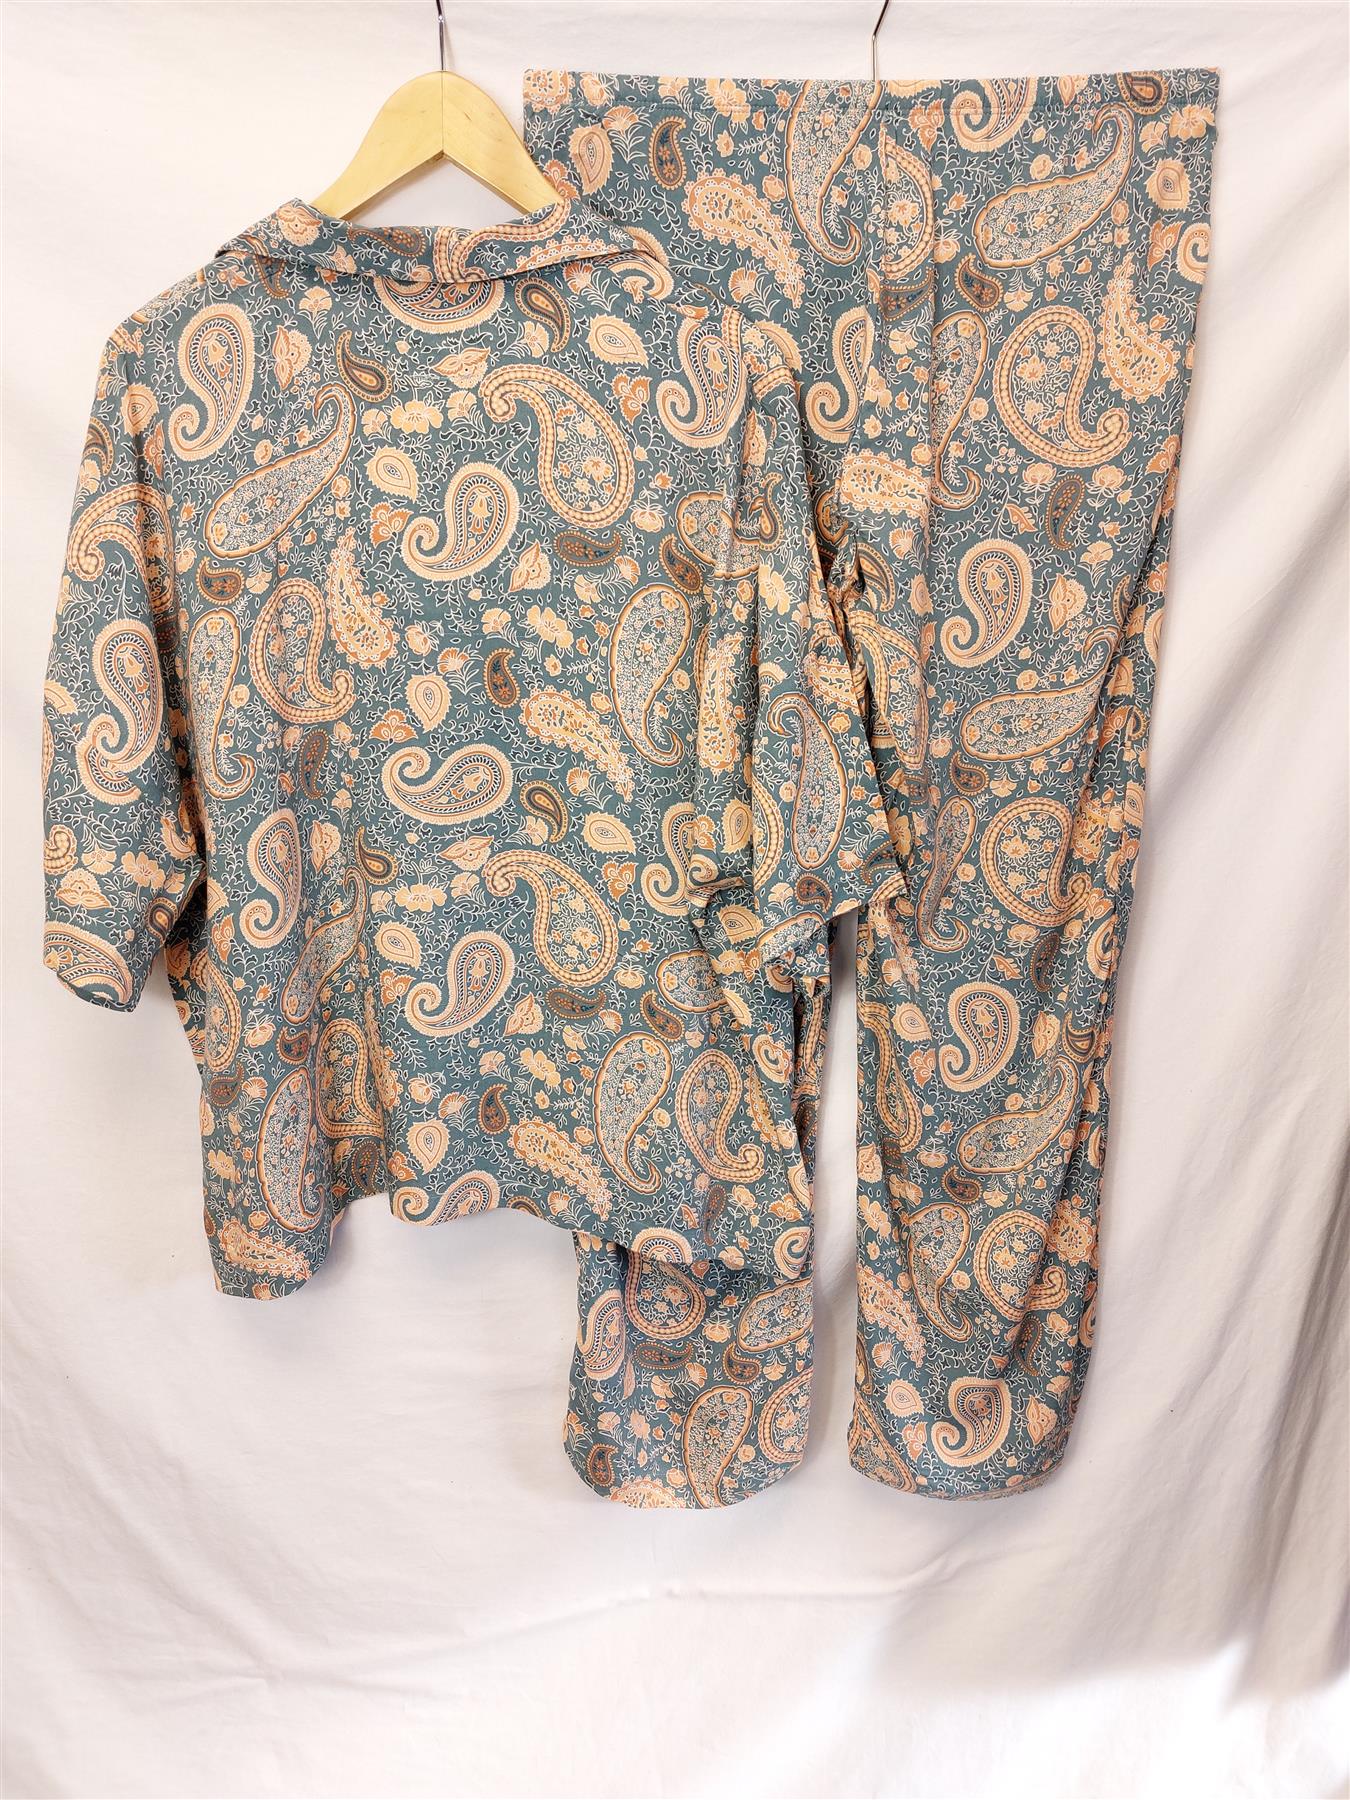 Women's Paisley Pyjama Set Top & Bottoms Short Sleeve Ex-Chainstore Brand New PJ